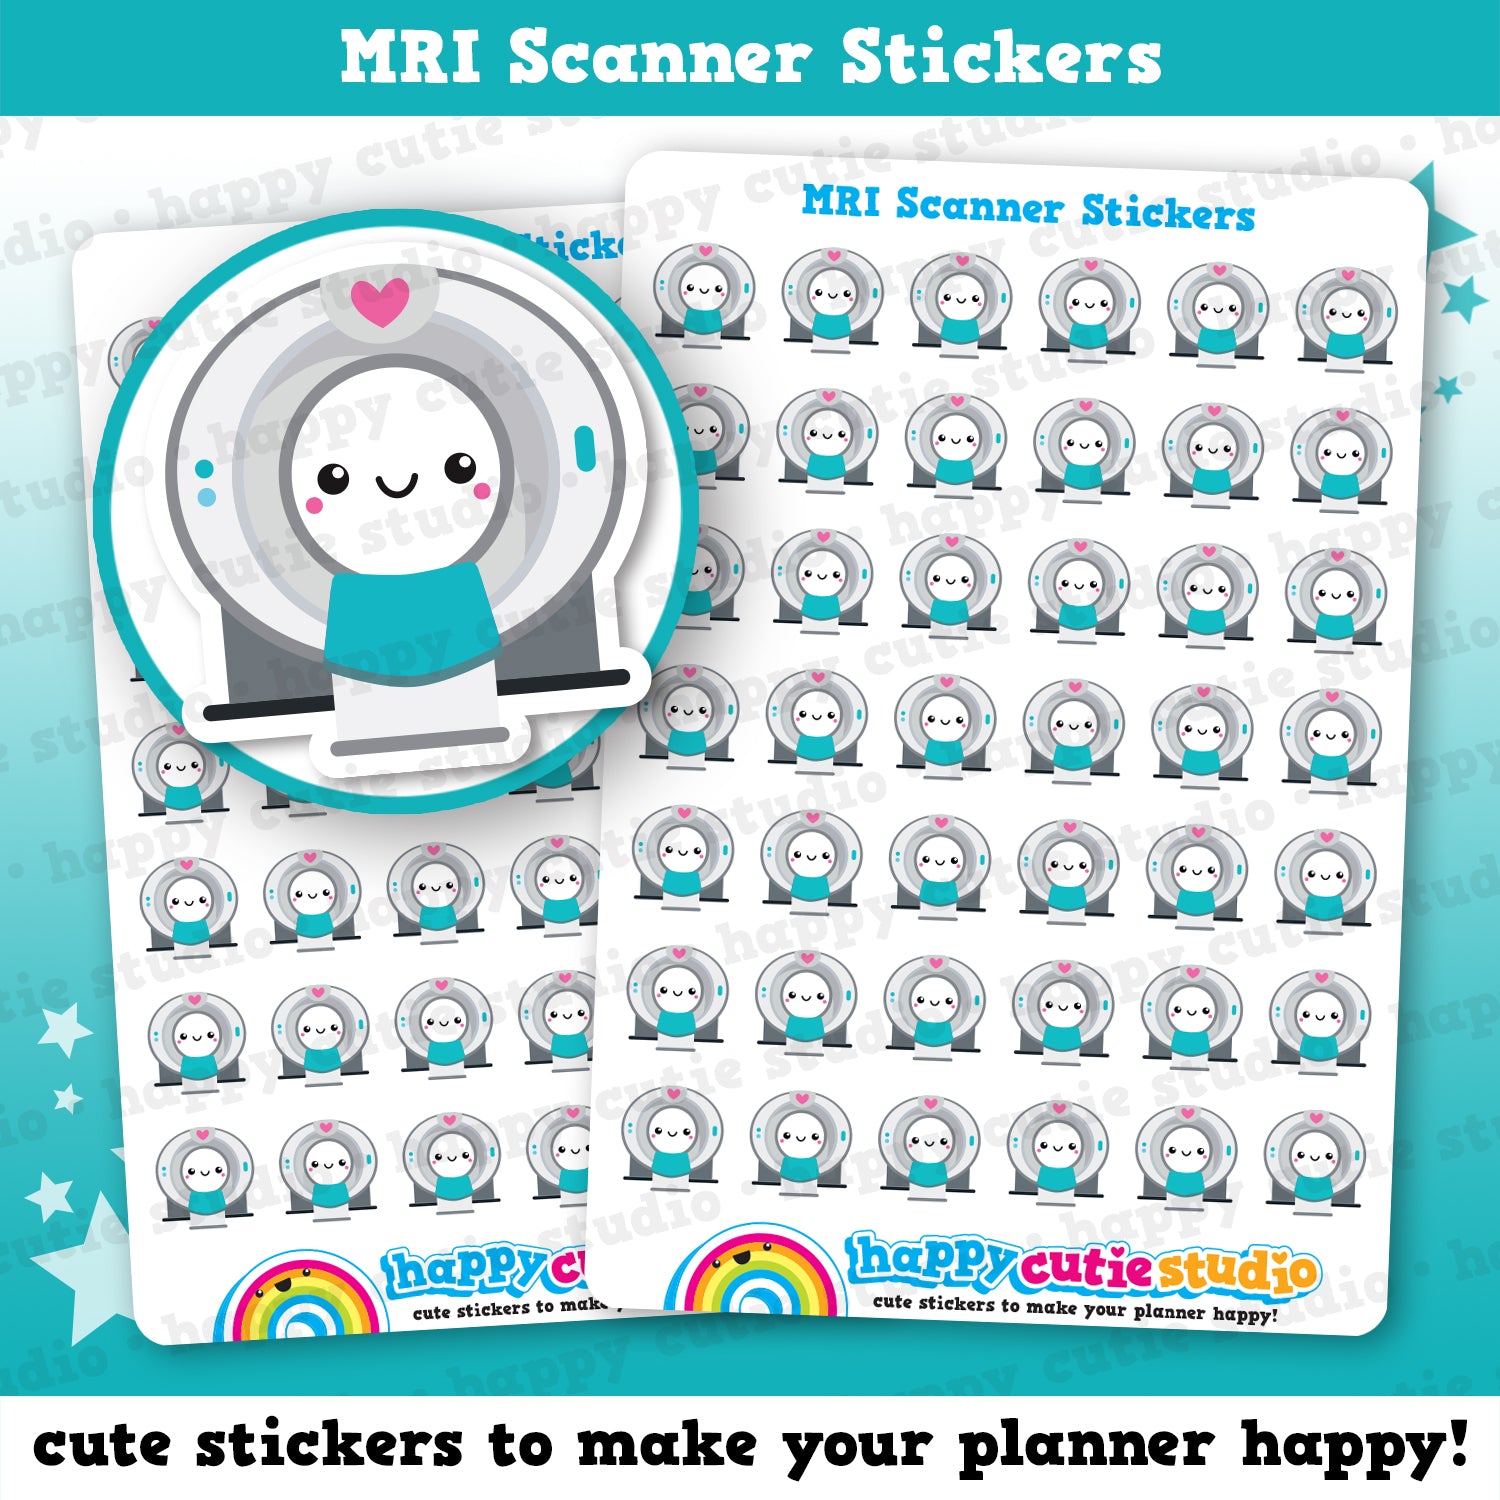 42 Cute MRI/CT/Scanner /Medical/Health Planner Stickers